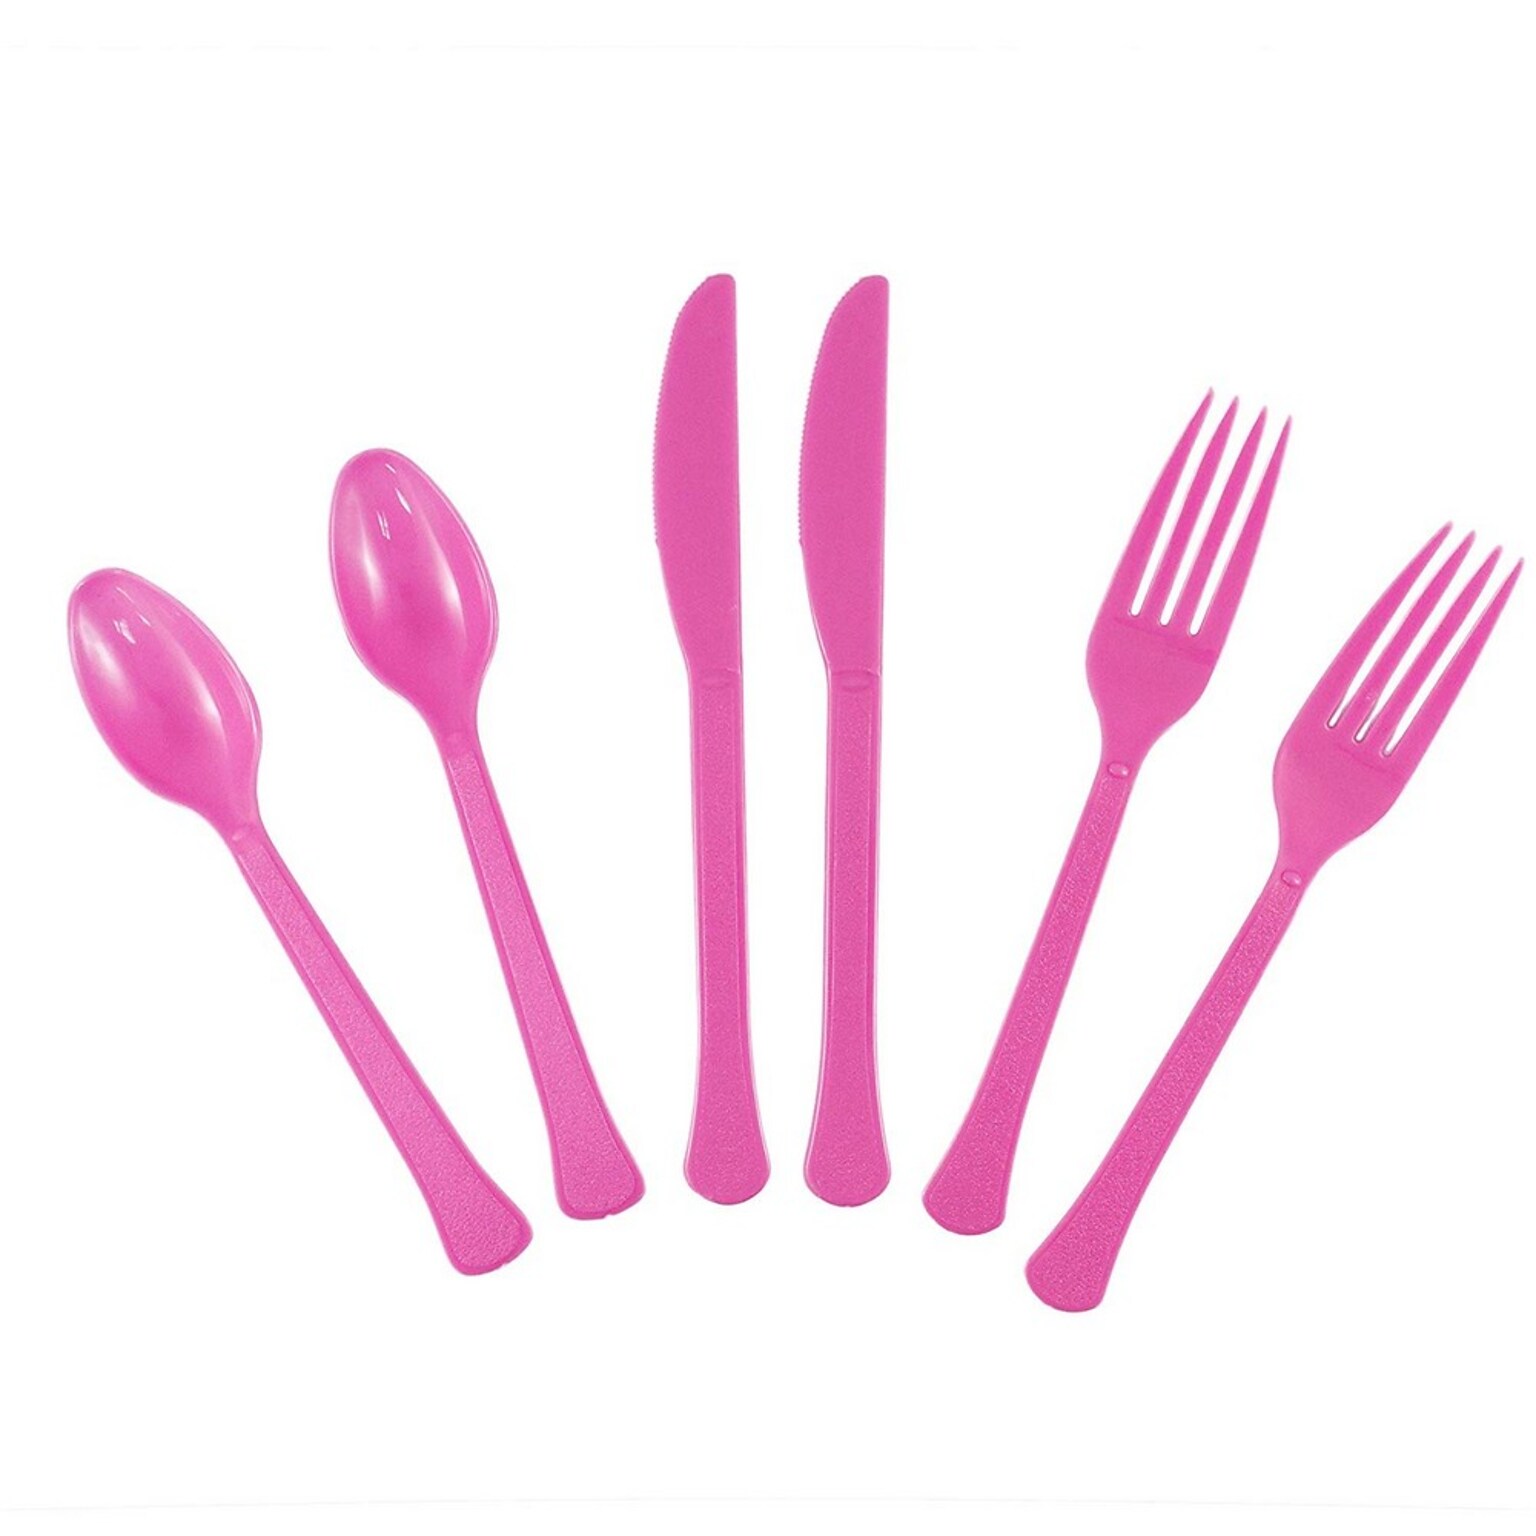 JAM PAPER Premium Extra Heavy Weight Cutlery , Assorted Utensils Set, Fuchsia Pink, 24 Disposable Utensils/Box